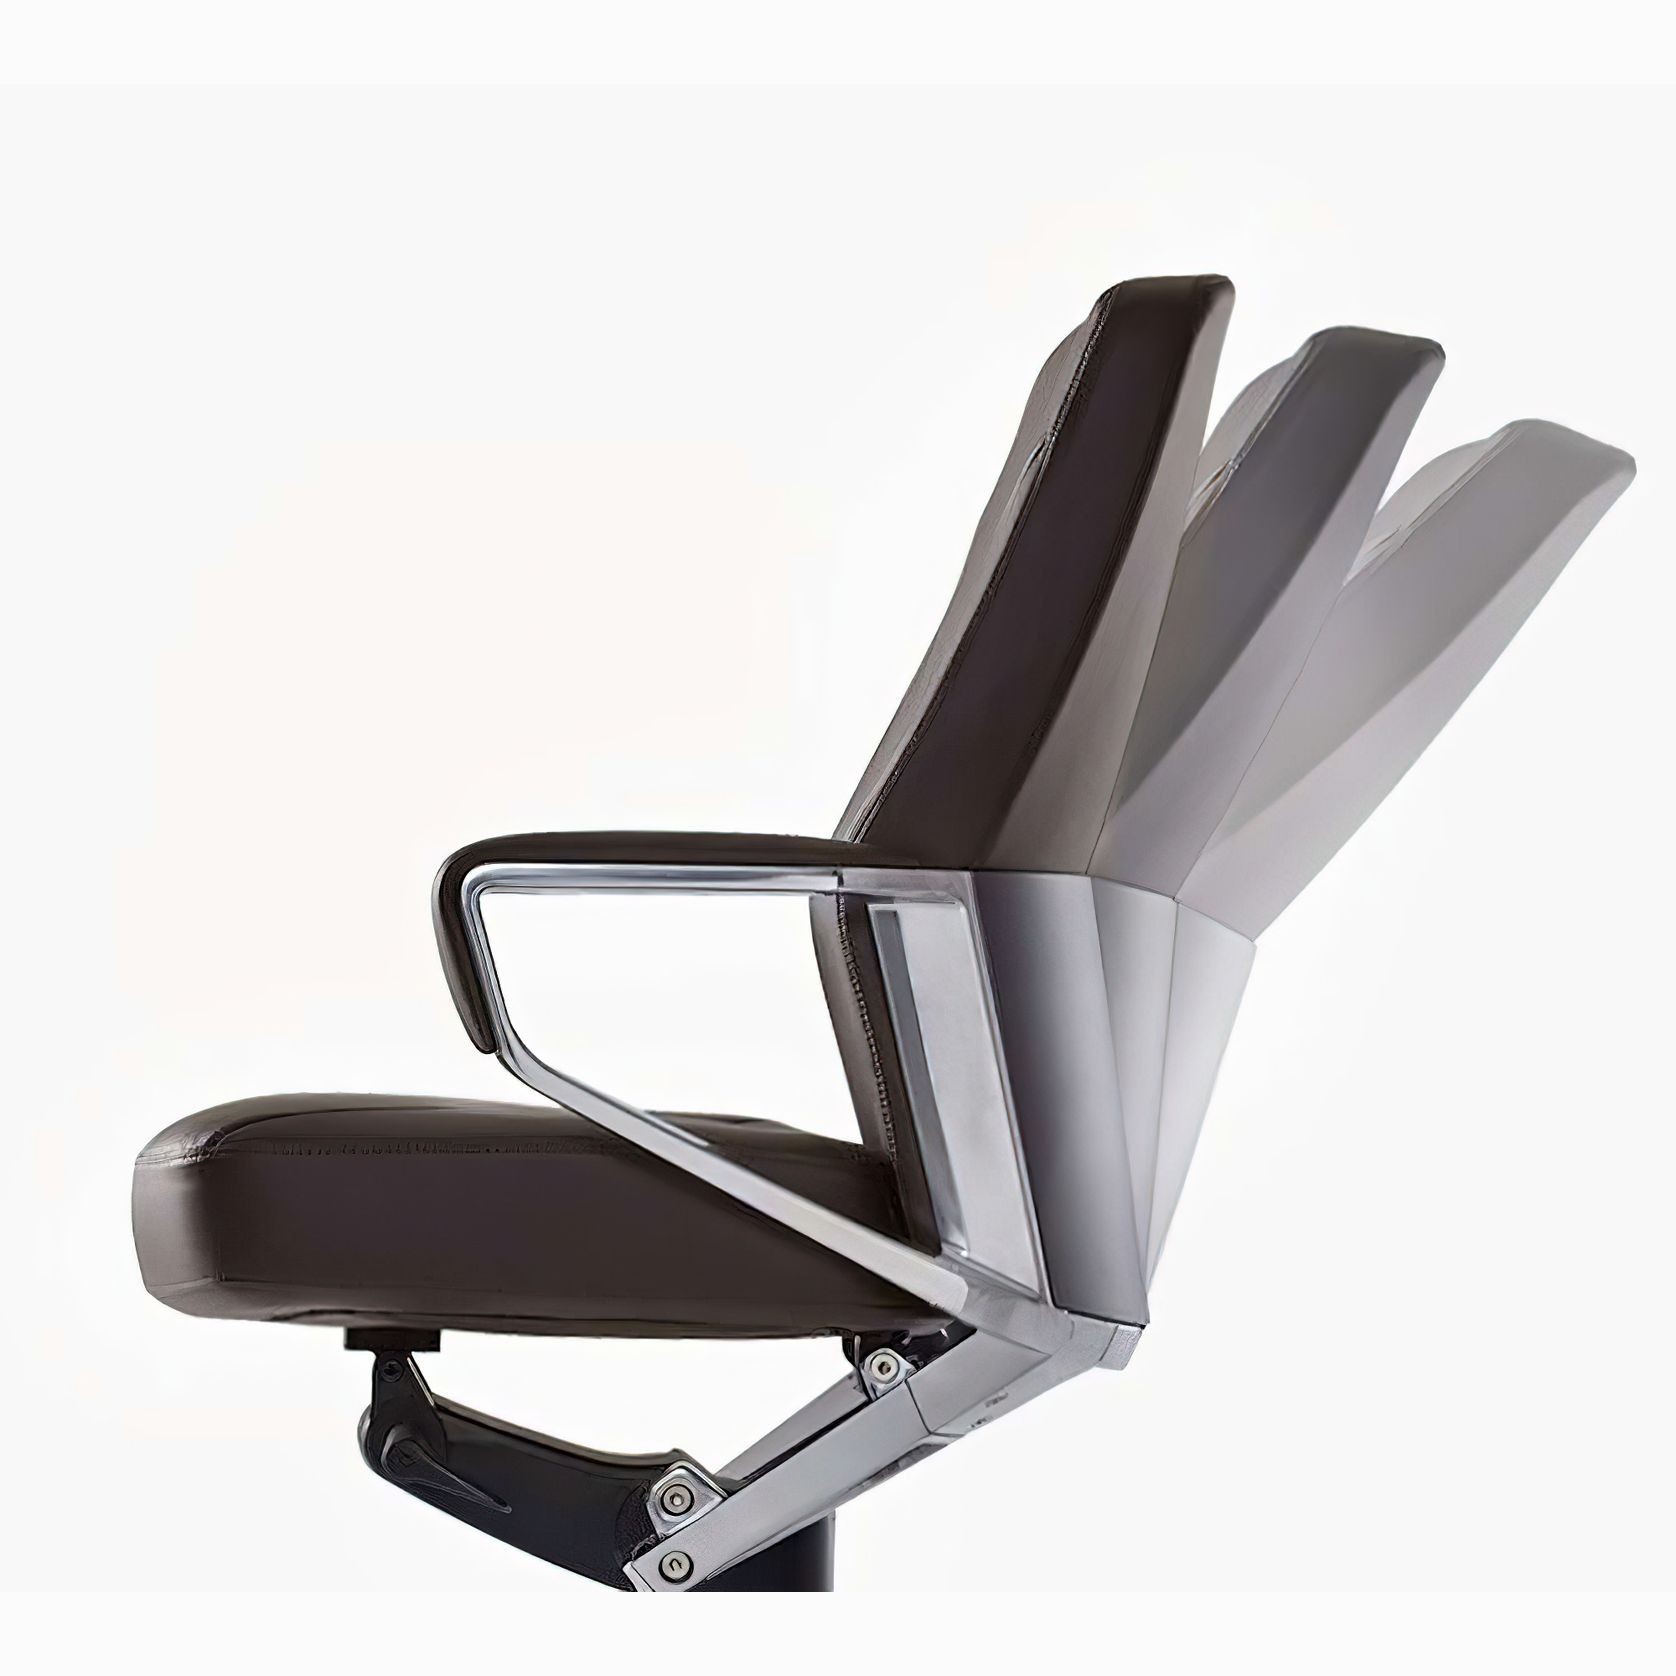 Sidiz E50 Office Chair gallery detail image